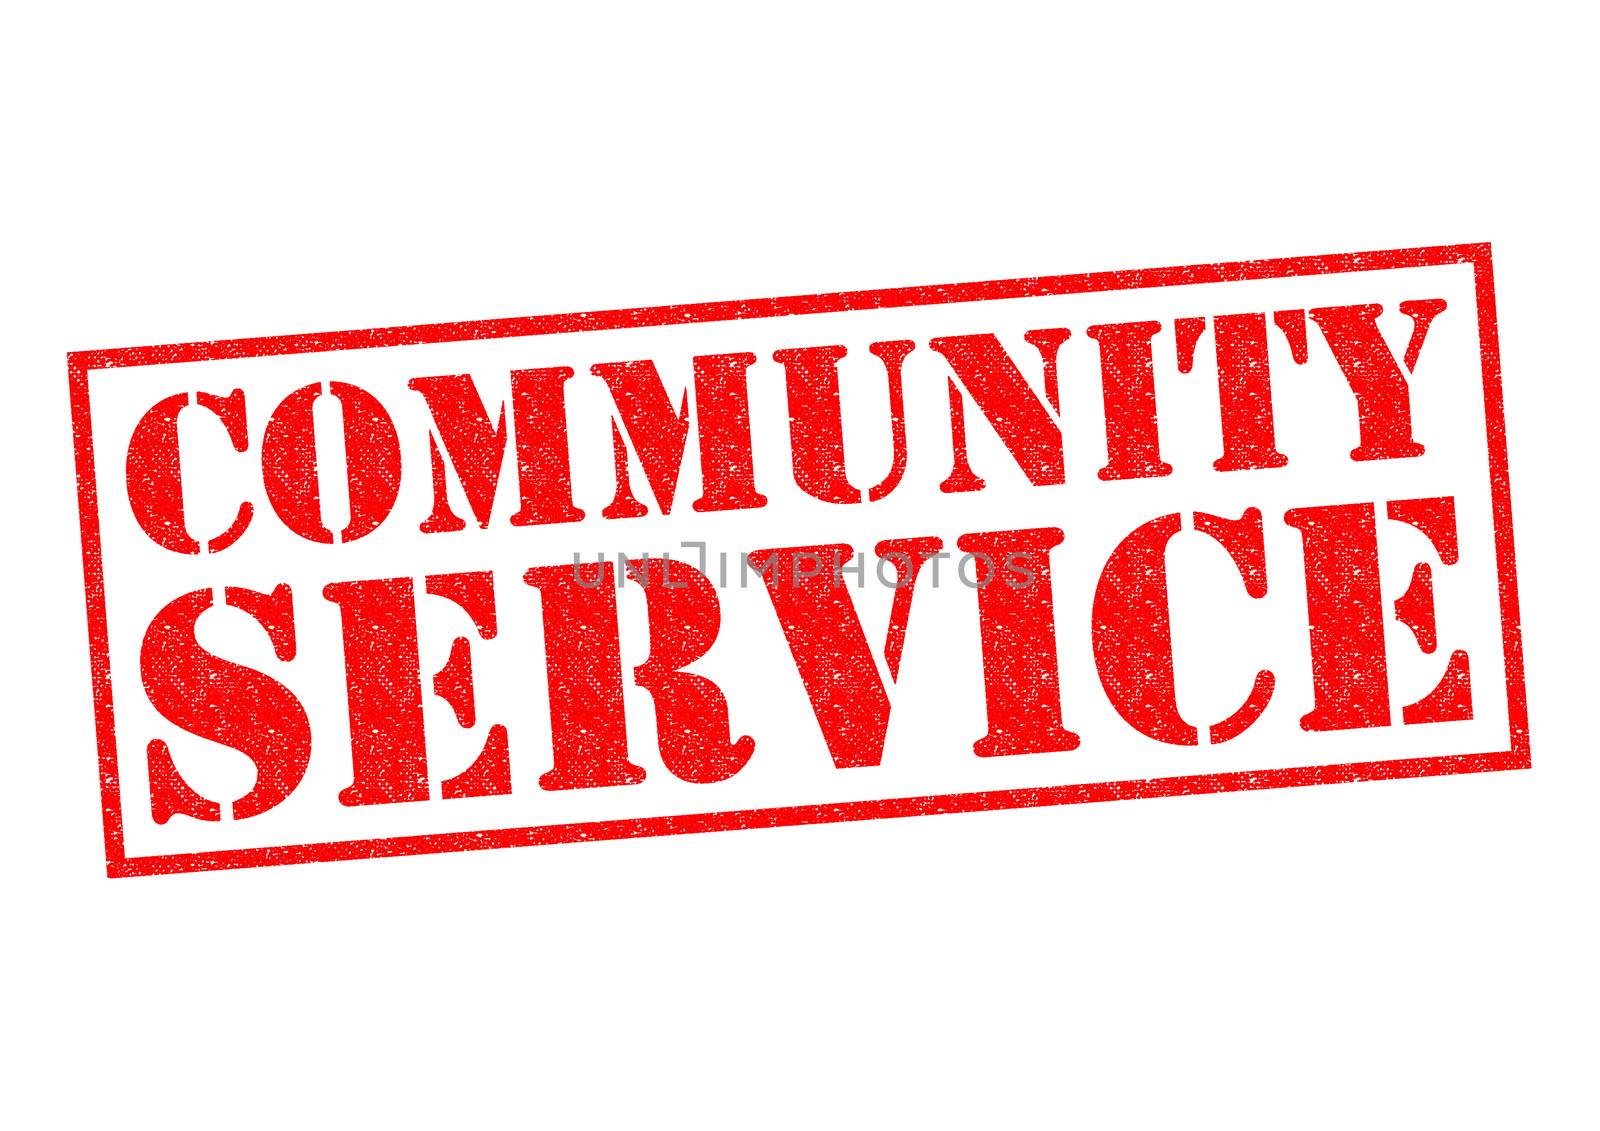 COMMUNITY SERVICE by chrisdorney